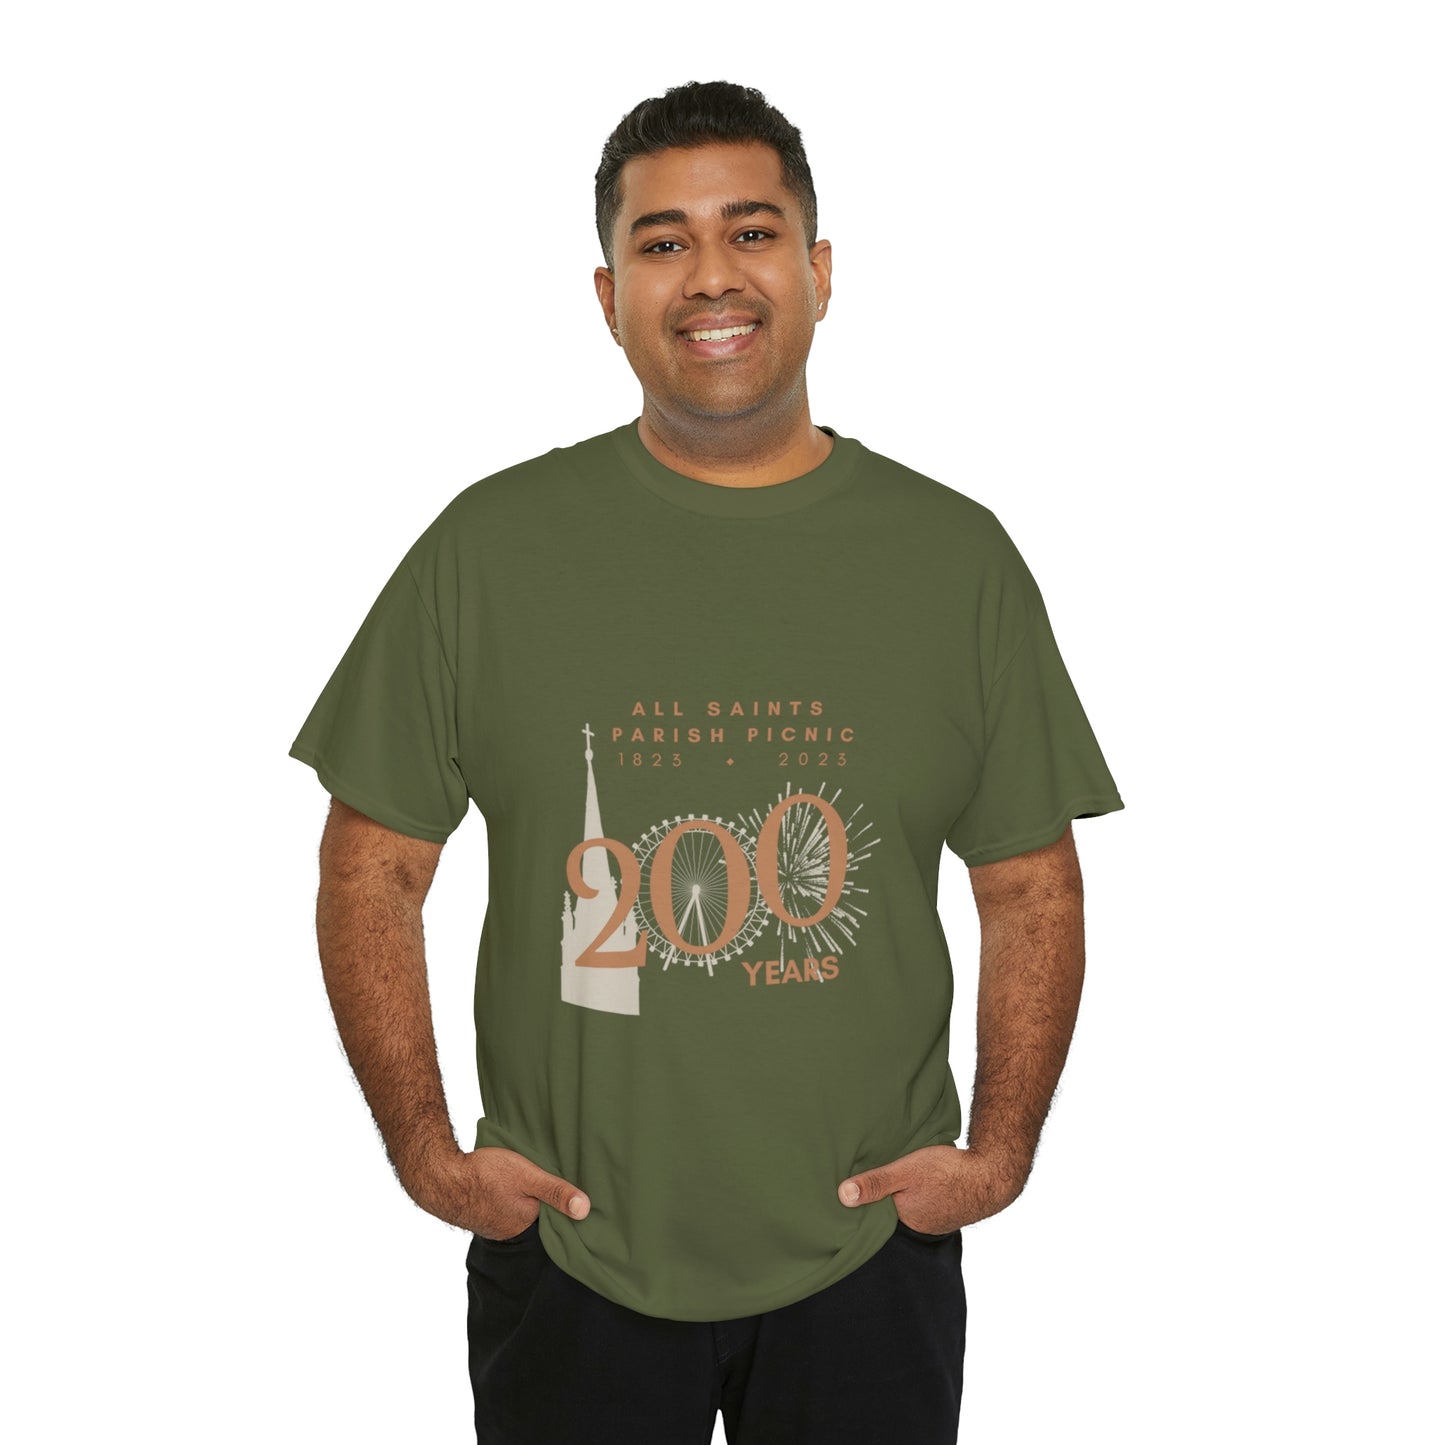 Parish Picnic 200th Anniversary Shirt - 2023